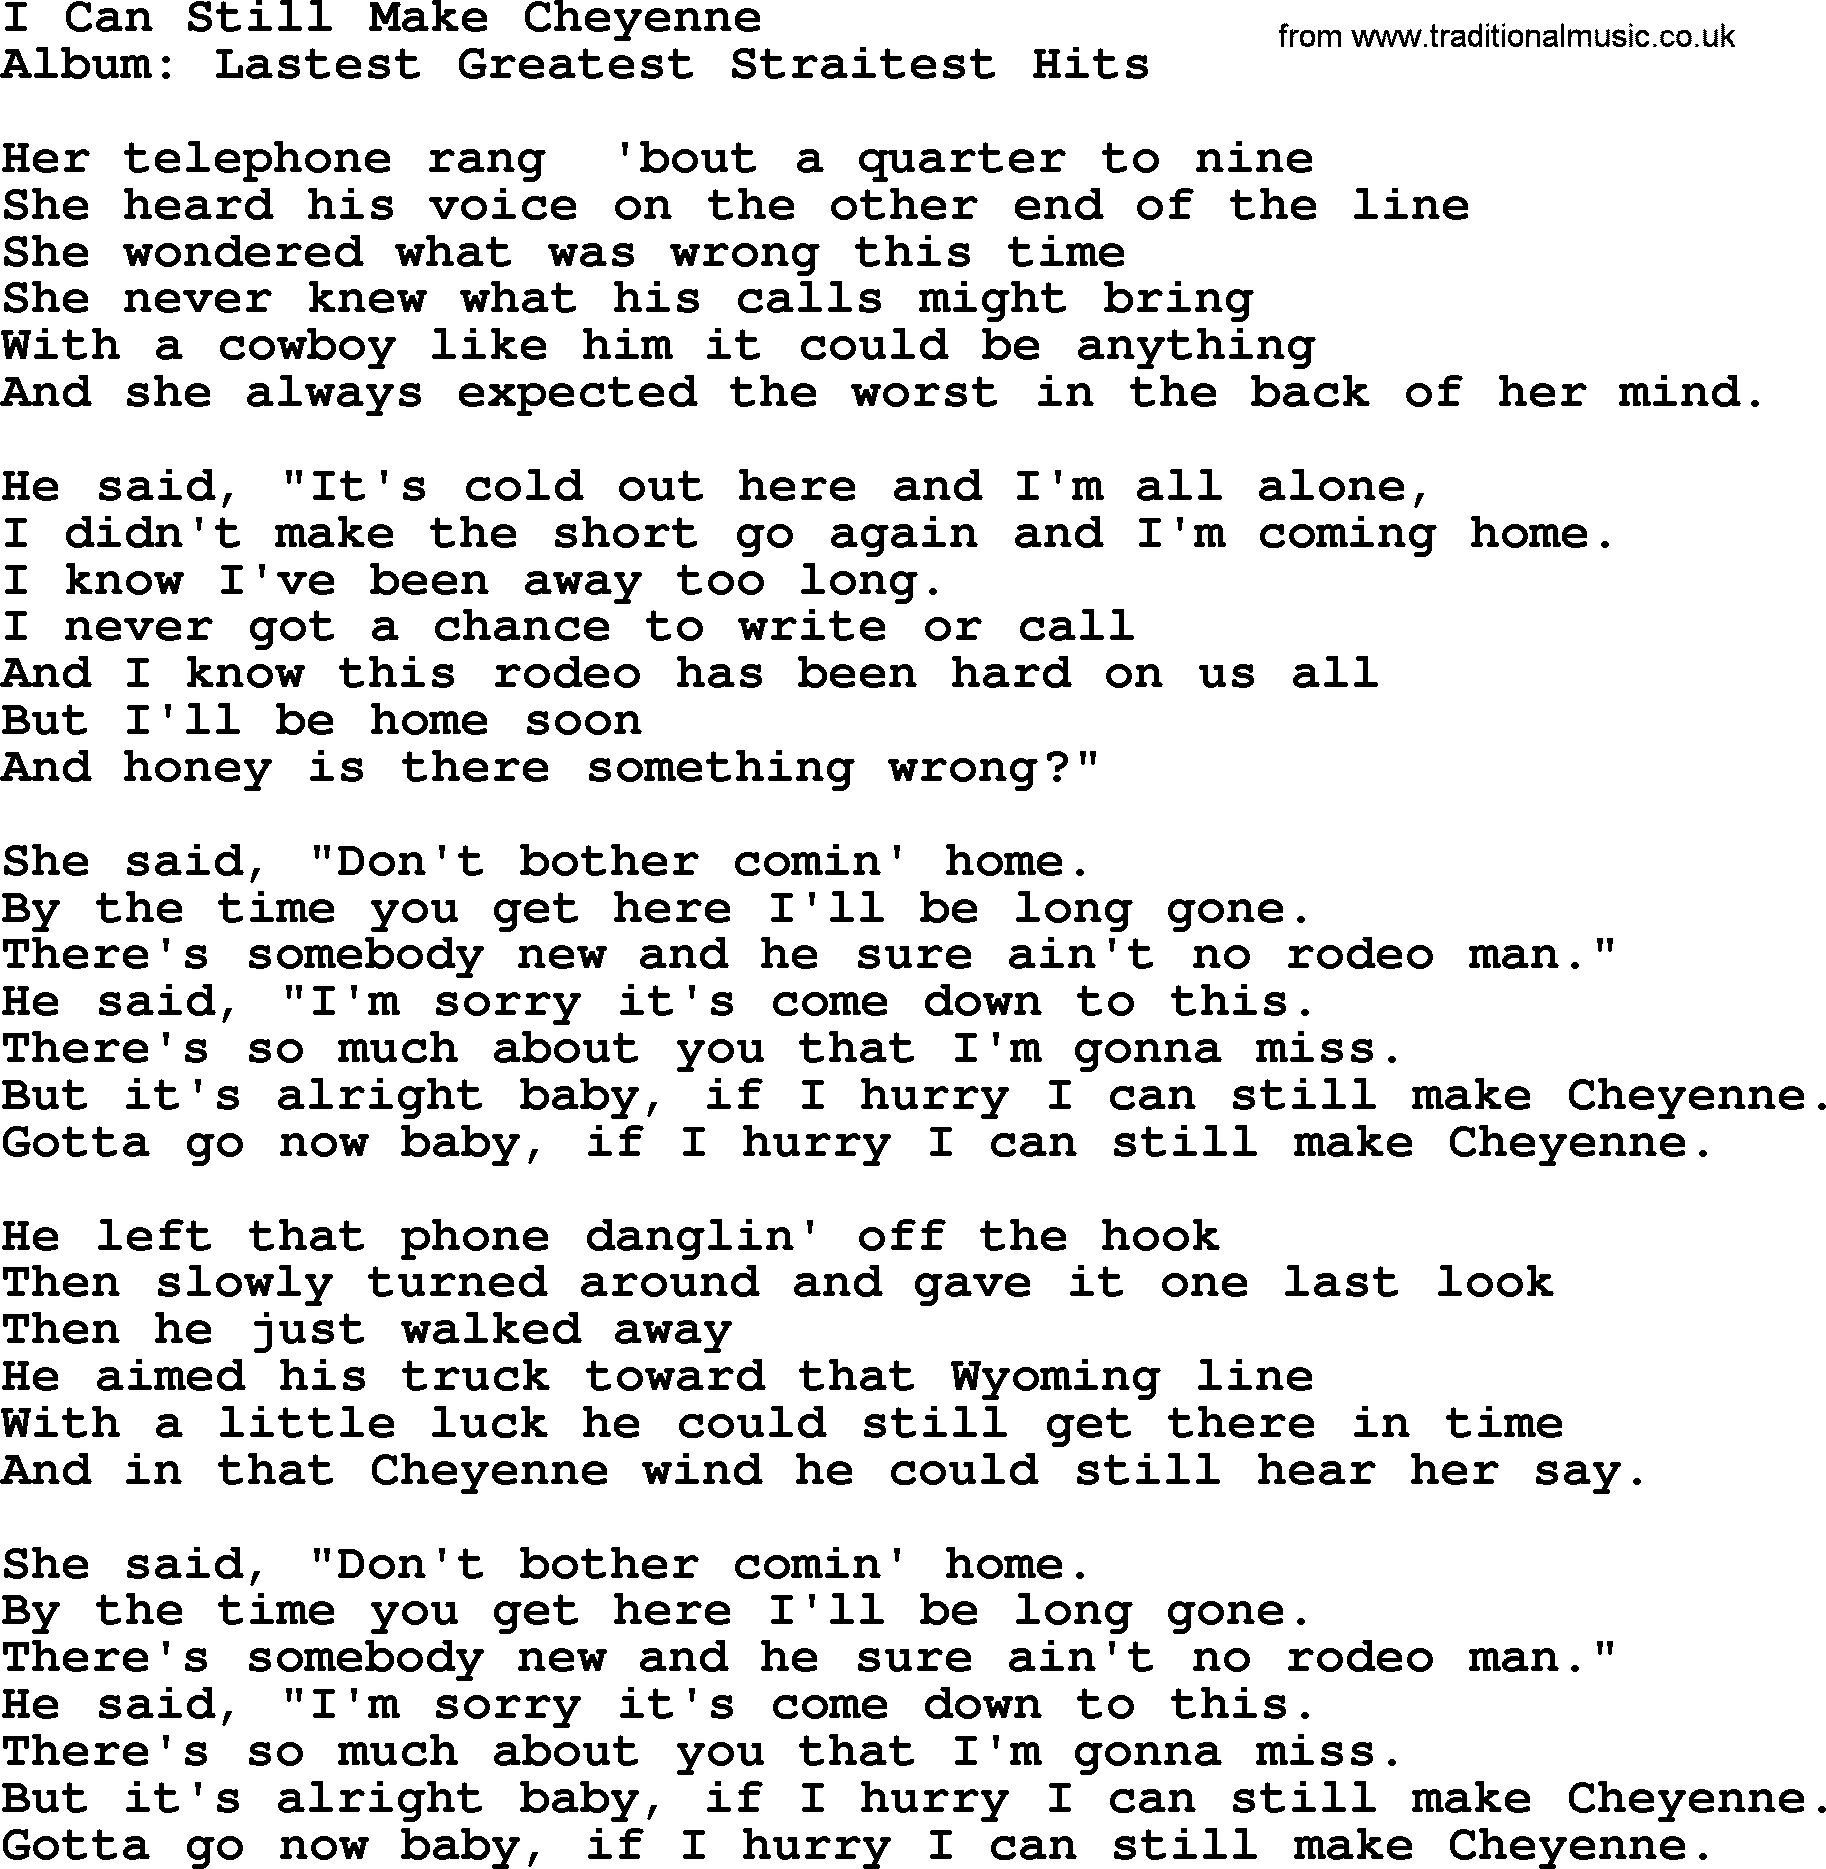 George Strait song: I Can Still Make Cheyenne, lyrics